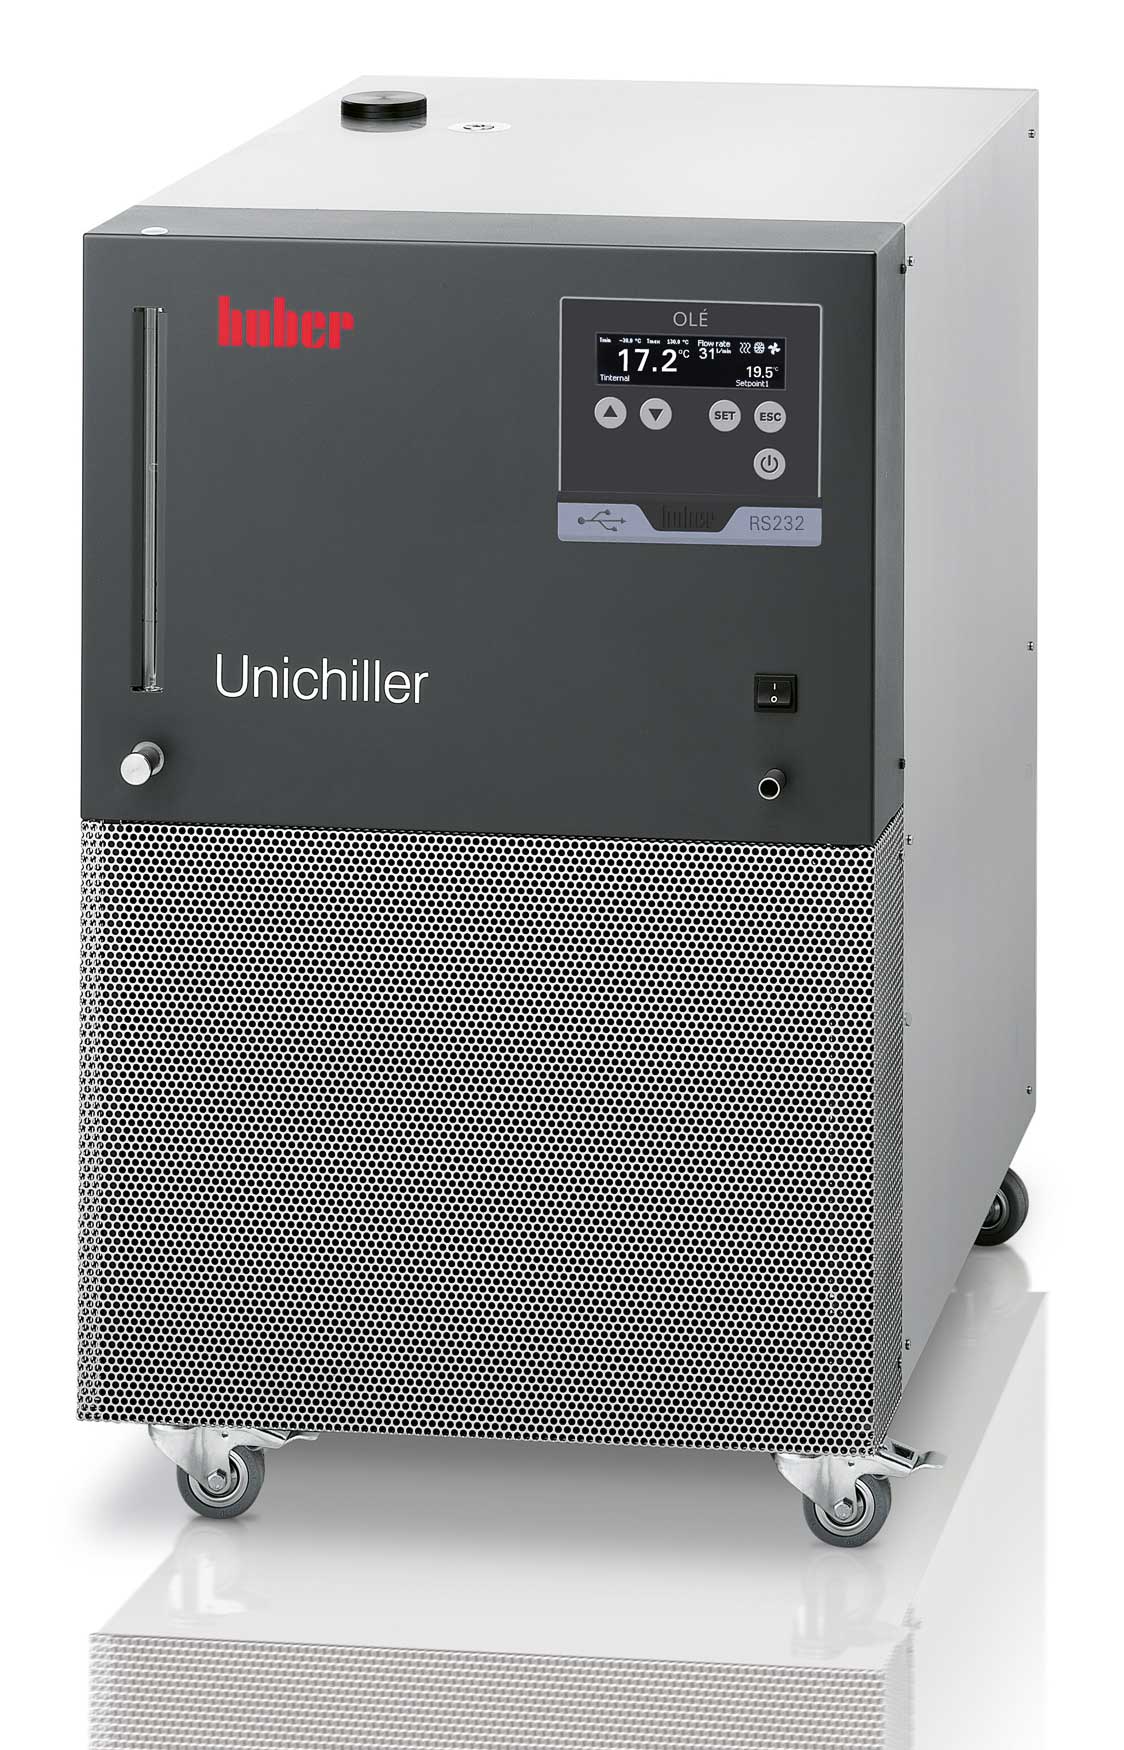 Unichiller 022w OLÉ. HUBER. Con controlador OLÉ y refrigerado por agua. Rango Tª (ºC): De -10 a 40. Estab. Tª (ºC): ±0,5. Potencia frigorífica a -10ºC (W): 1000. Potencia frigorífica a 0ºC (W): 1600. Potencia frigorífica a 15ºC (W): 2200. Presión (l/min) - bar: 29-1. Vol. (l): 3,8. Dim. AnxAlxPr (mm): 420x487x579